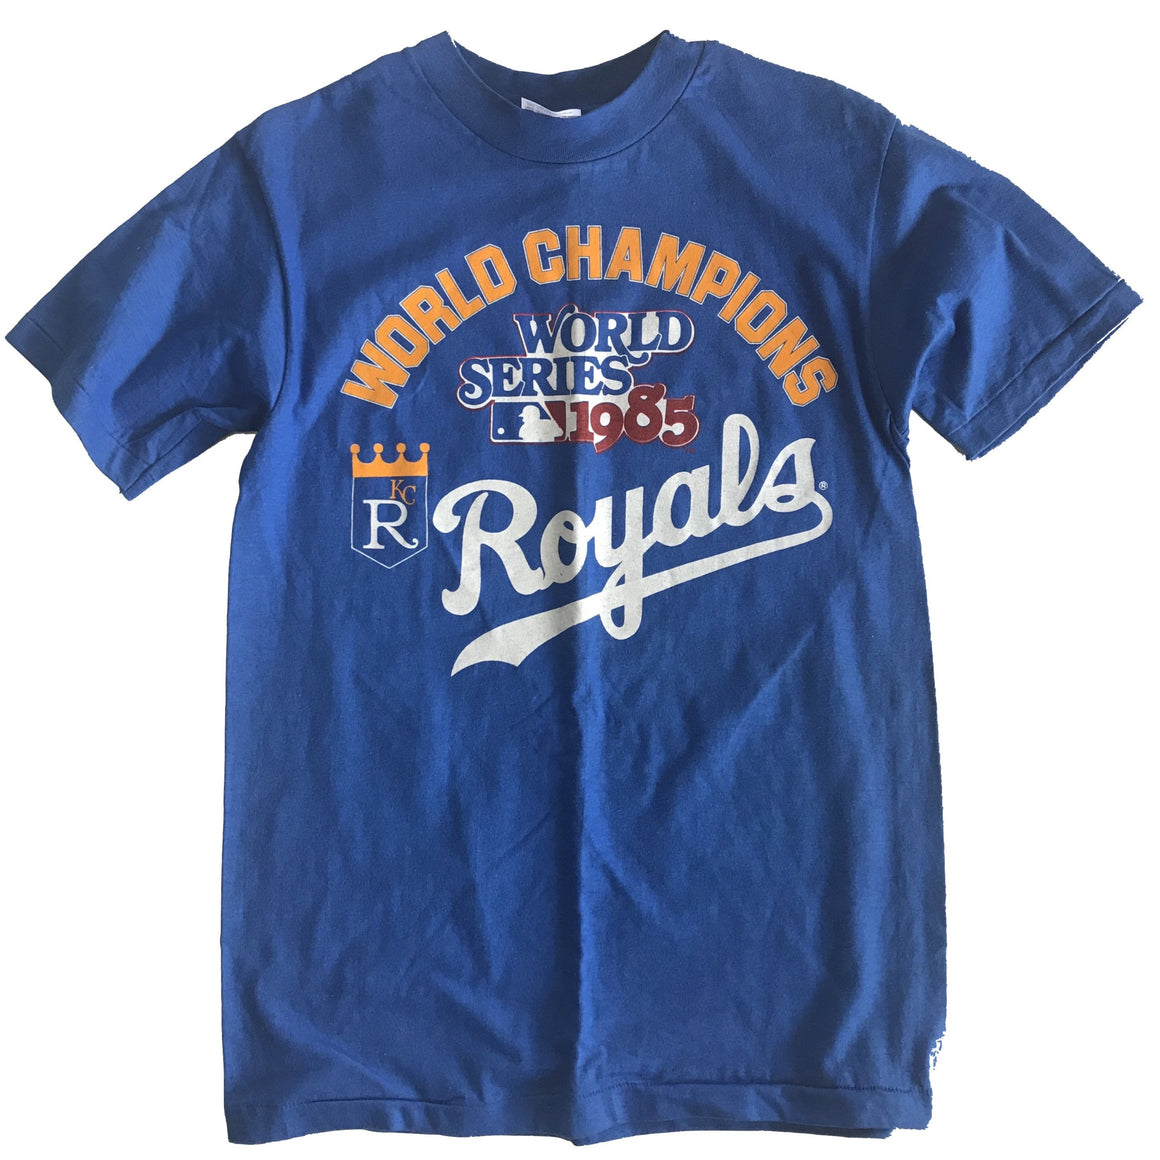 Vintage Kansas City Royals 1985 shirt